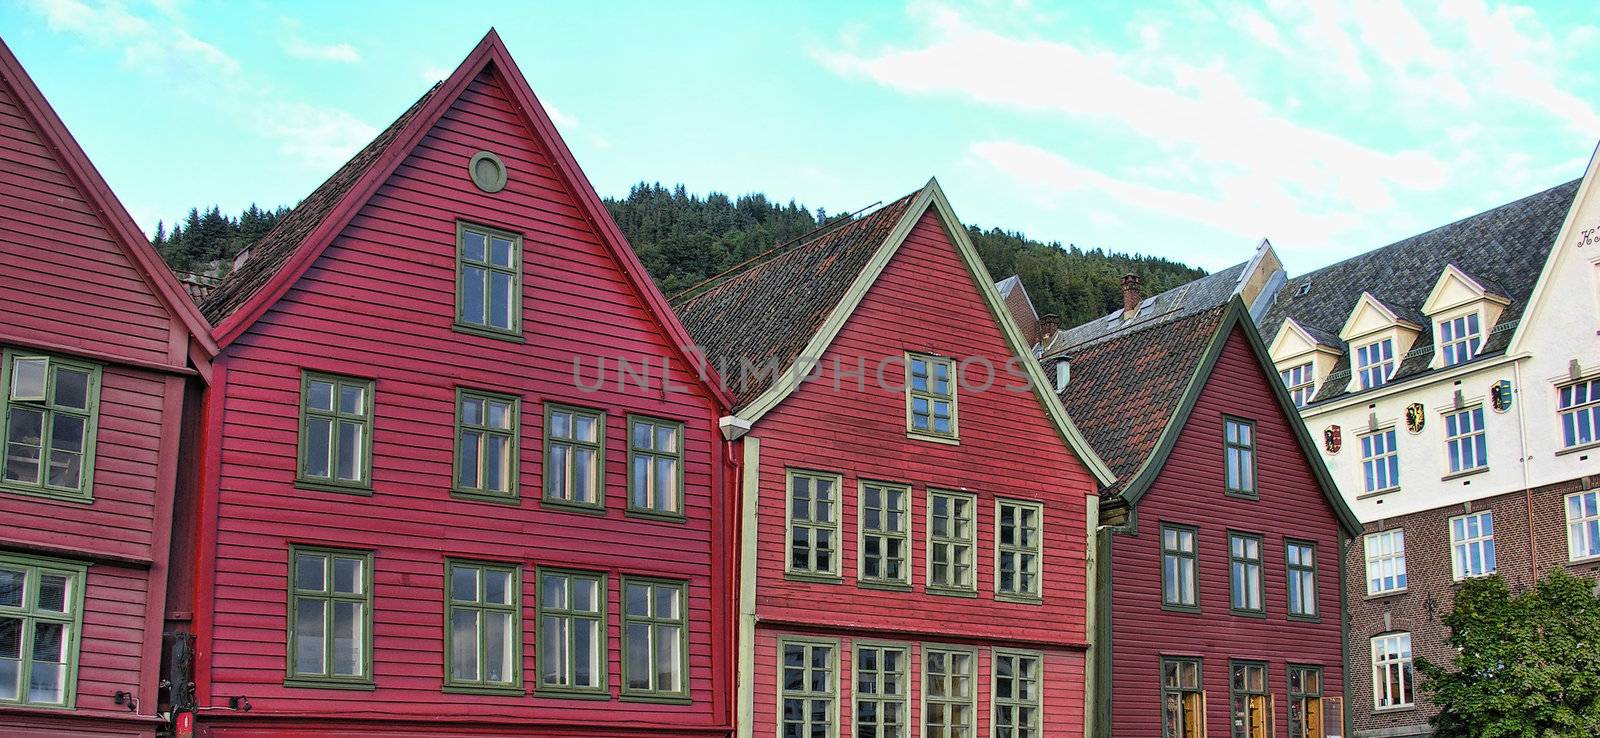 Architecture of Bergen, Norway, during Summer